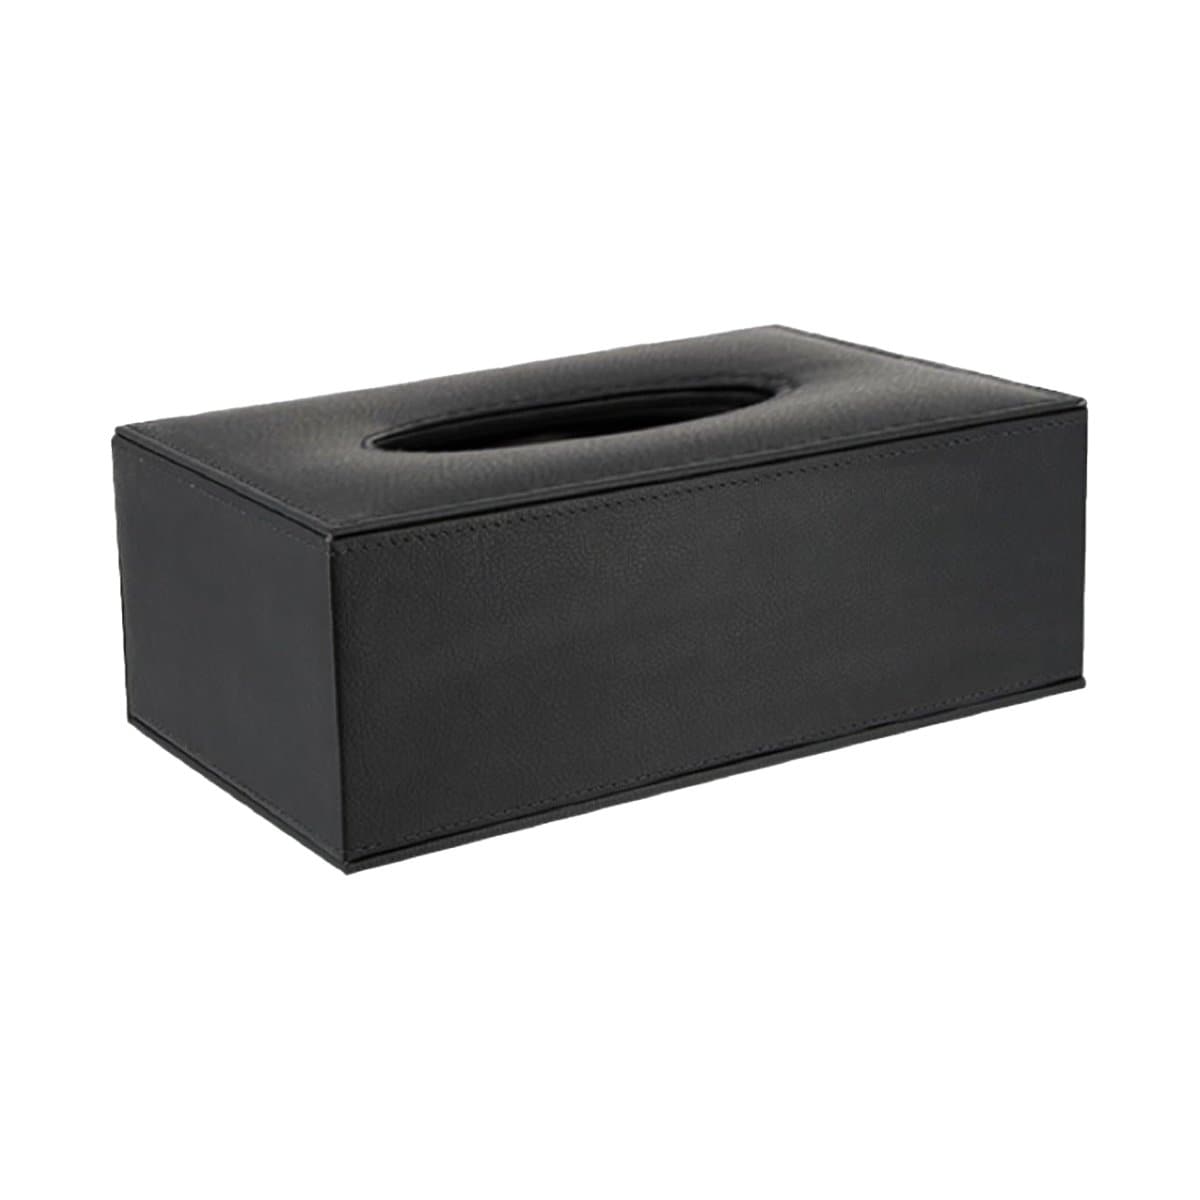 Konrad S. Tissue Box Cover, rectangular 25 x 13 x 8.5cm, PU Leather, Black